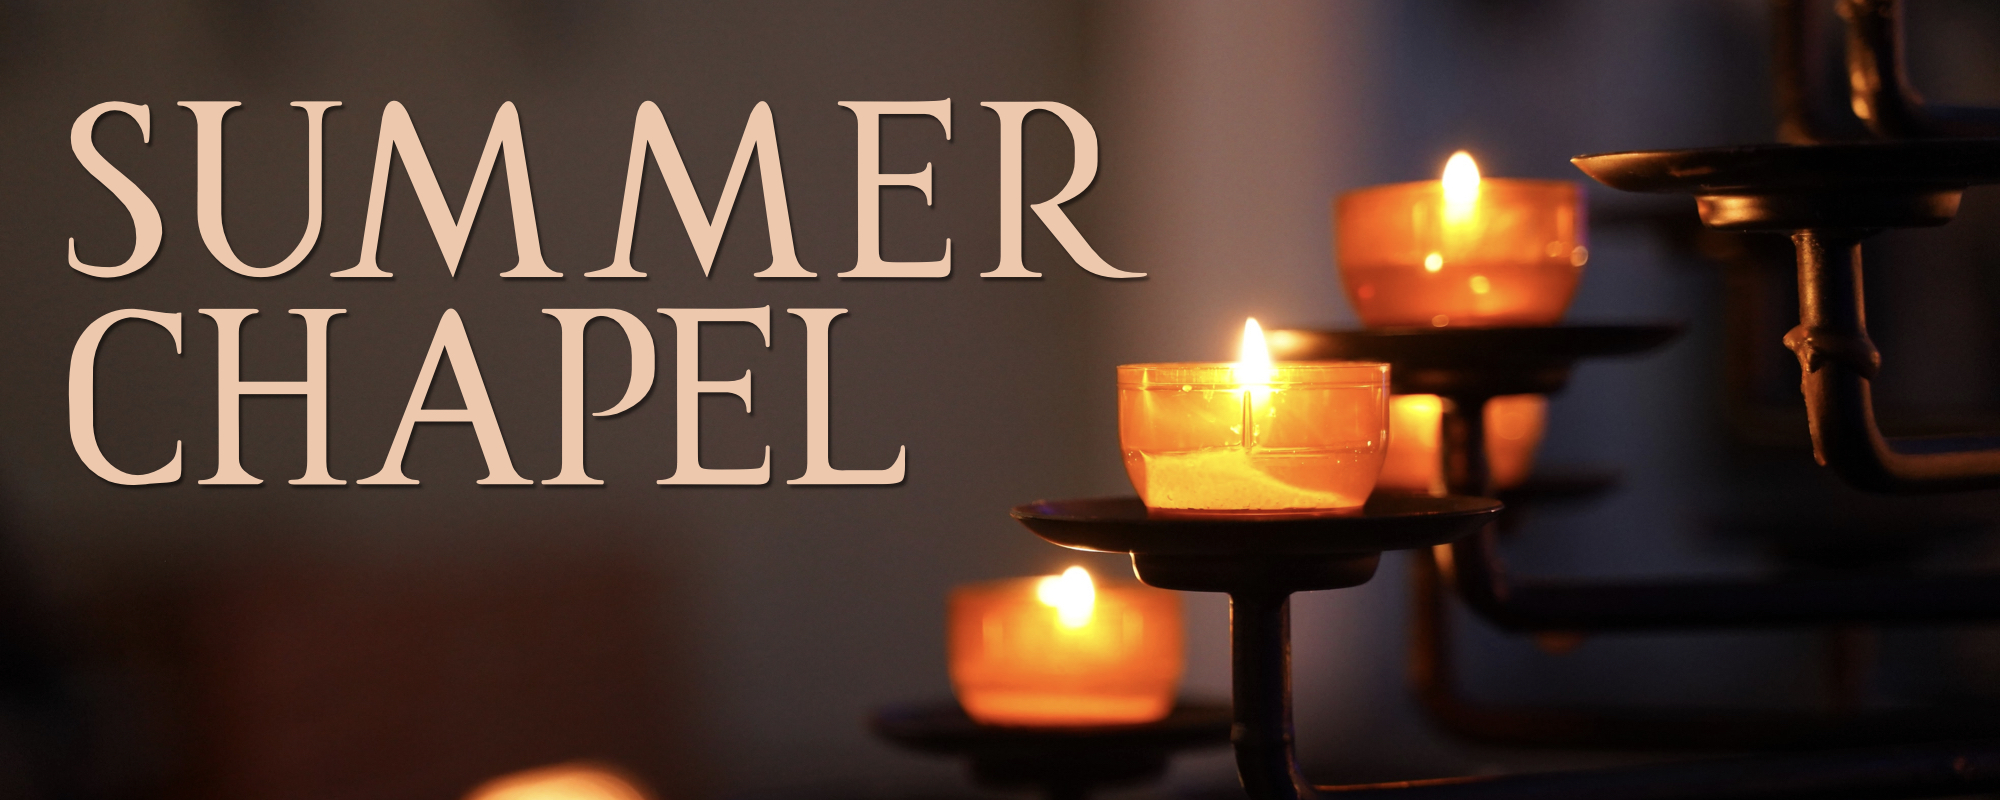 Summer Chapel Order of Worship June 25th